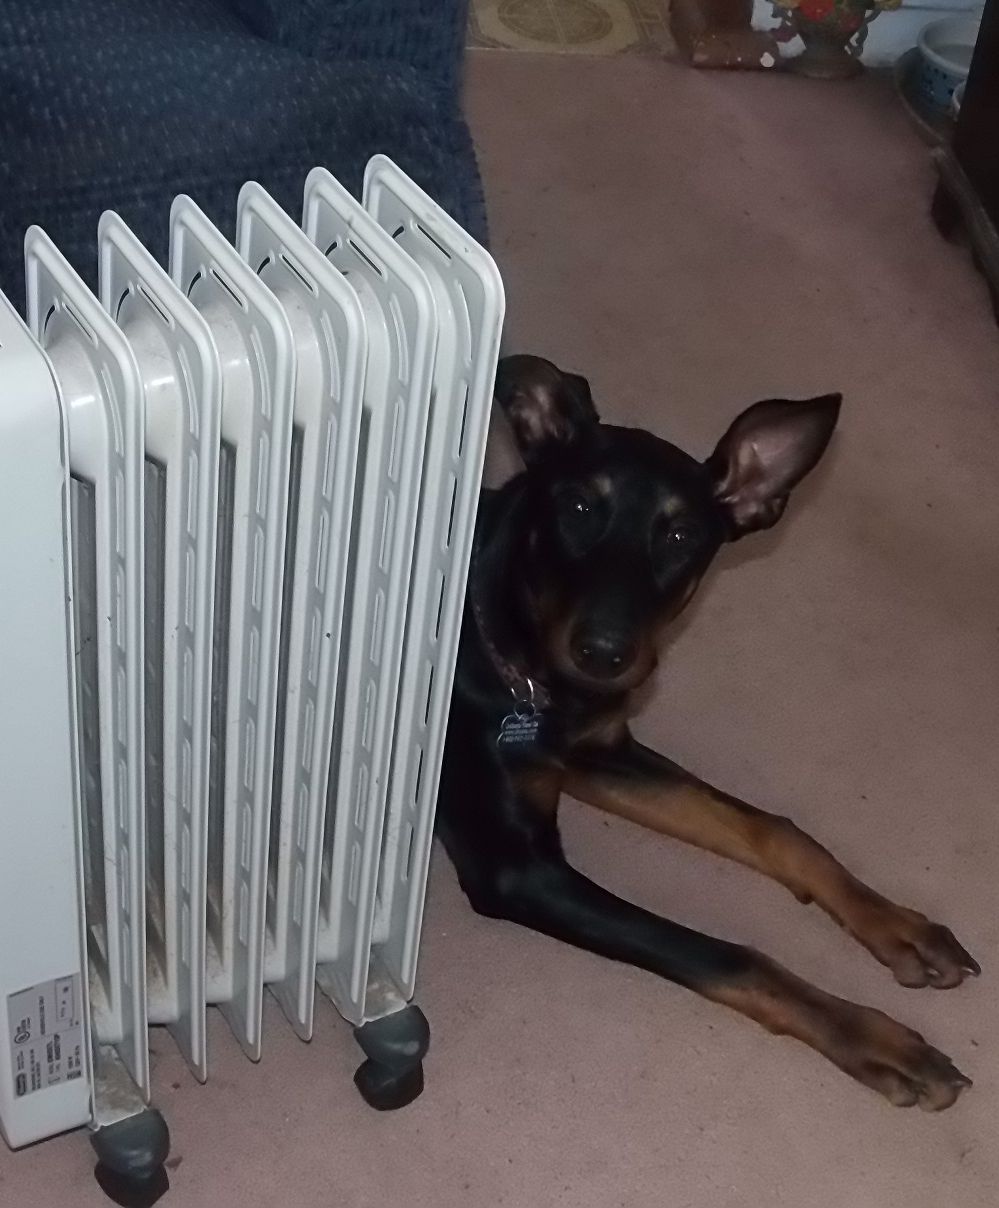 Rosie staying warm